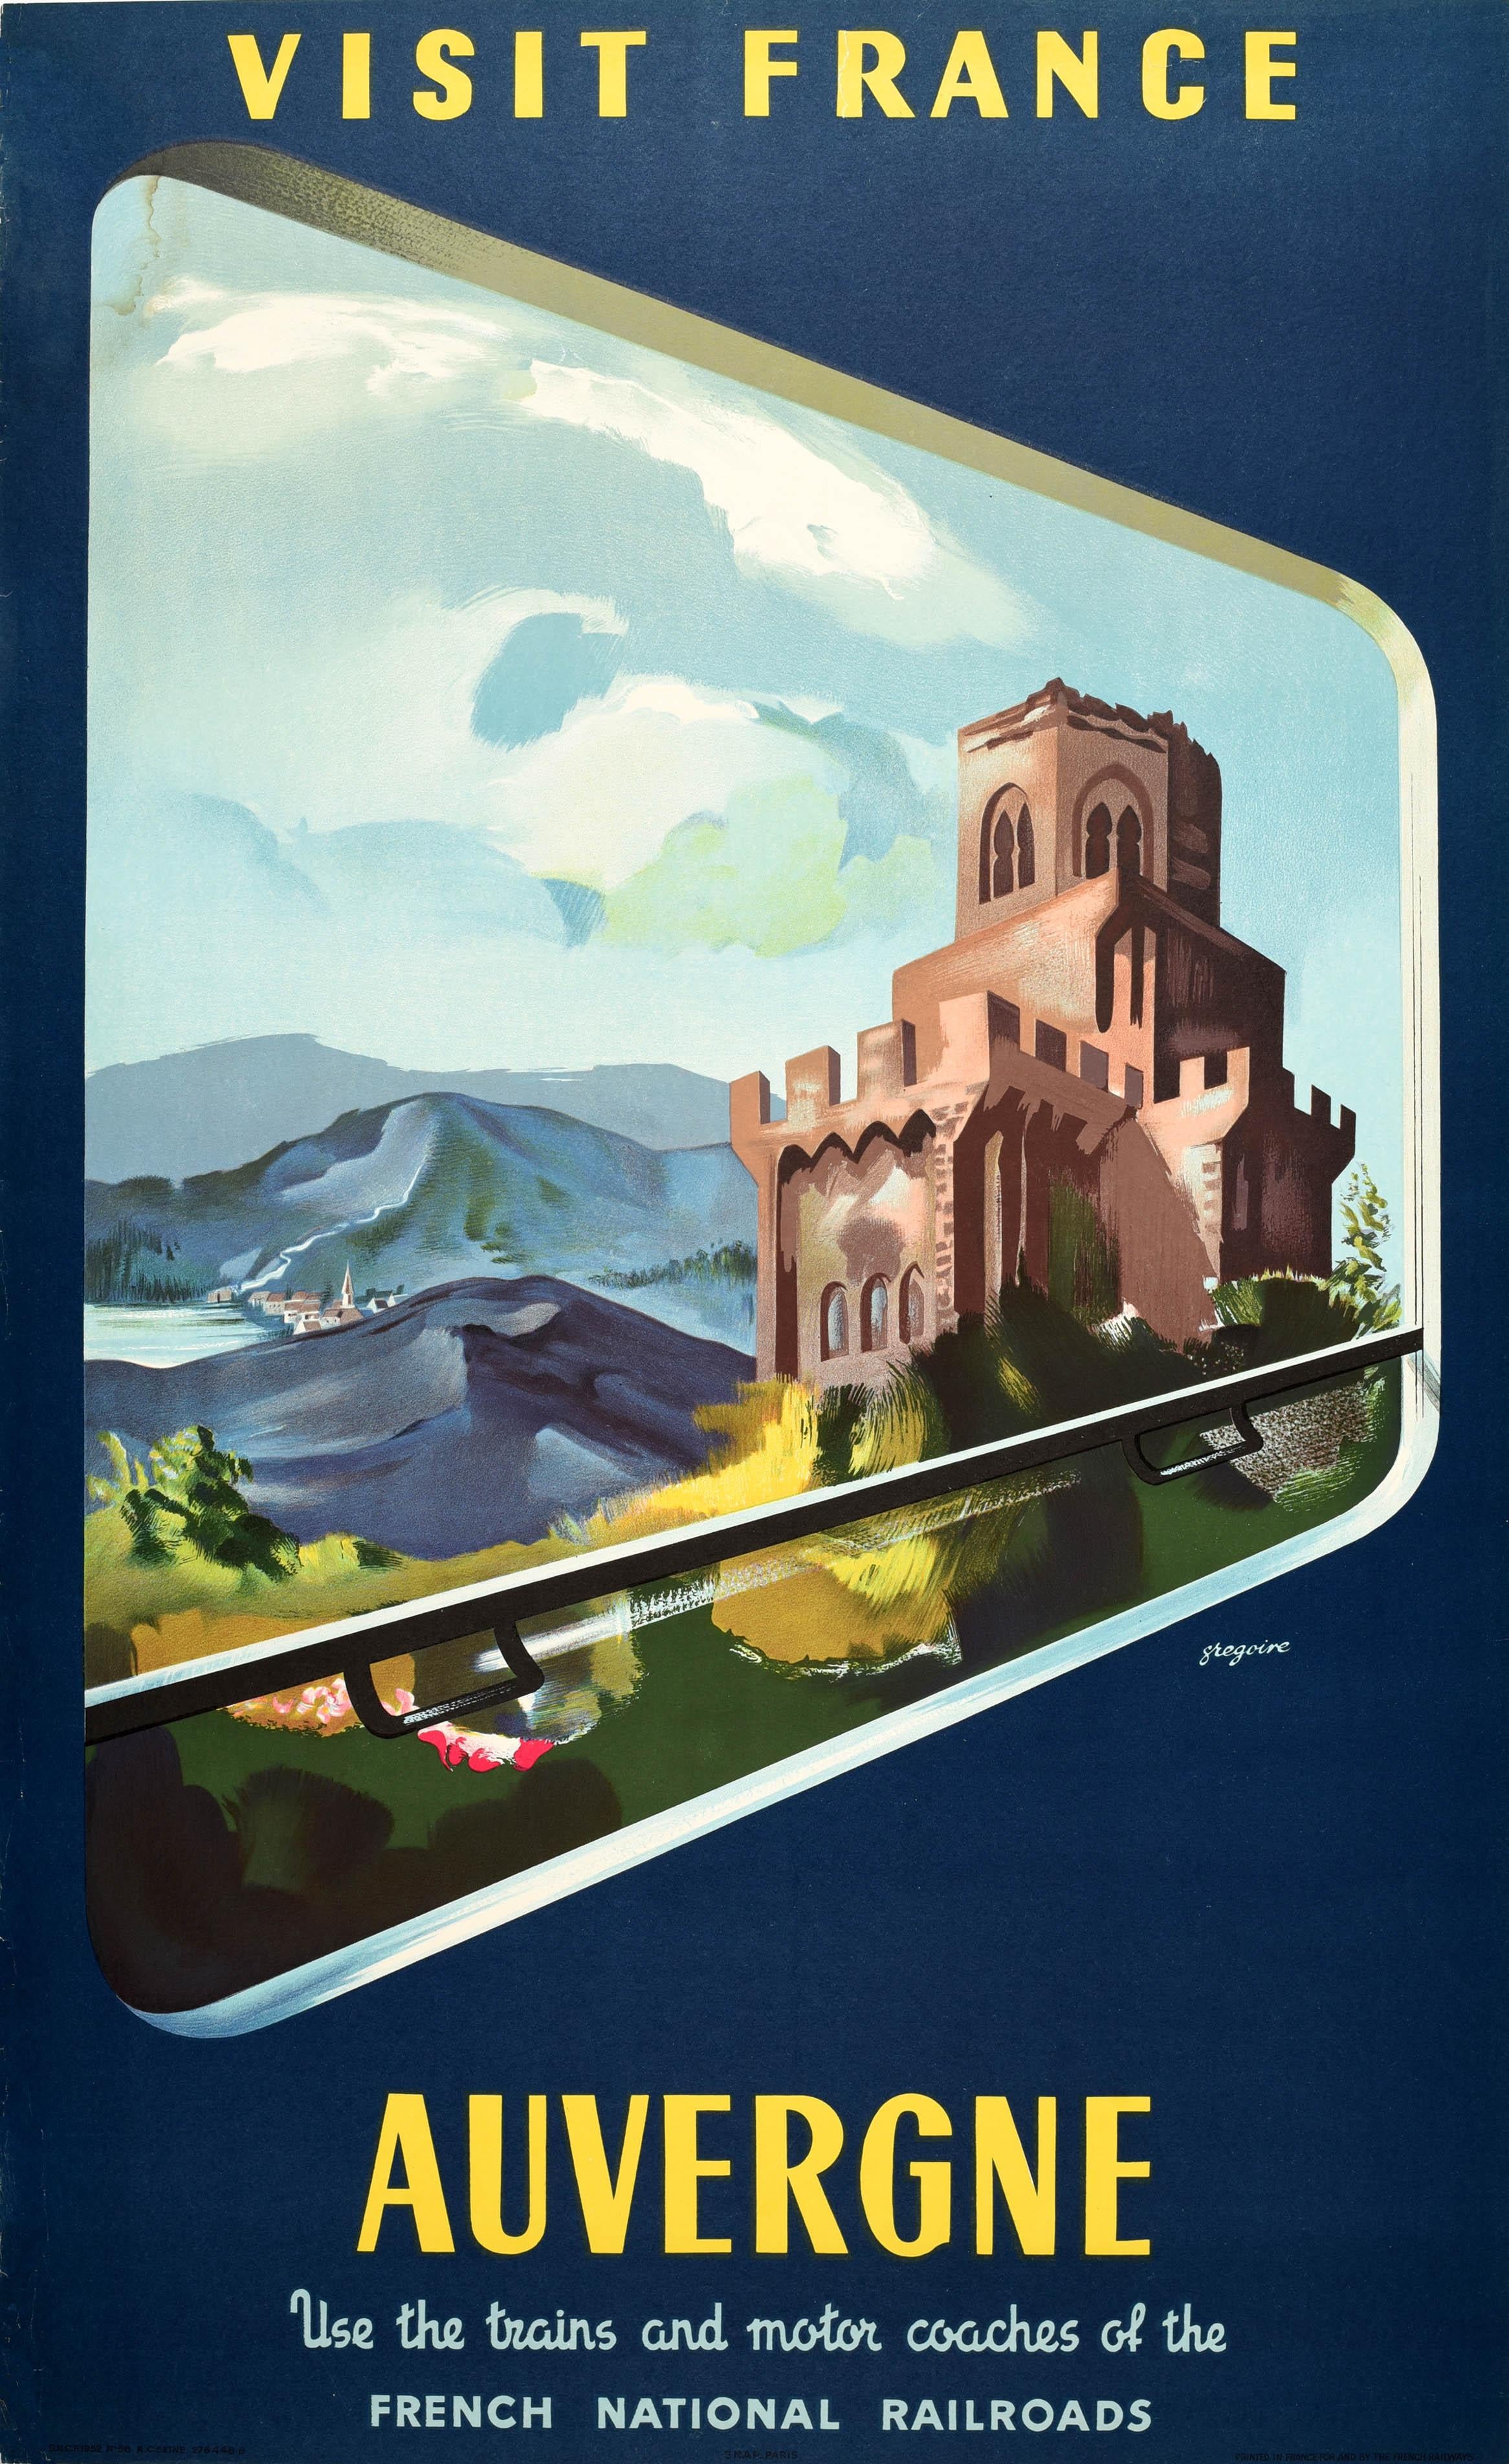 Unknown Print - Original Vintage Railway Travel Poster Auvergne Visit France SNCF Rhone Alps Art